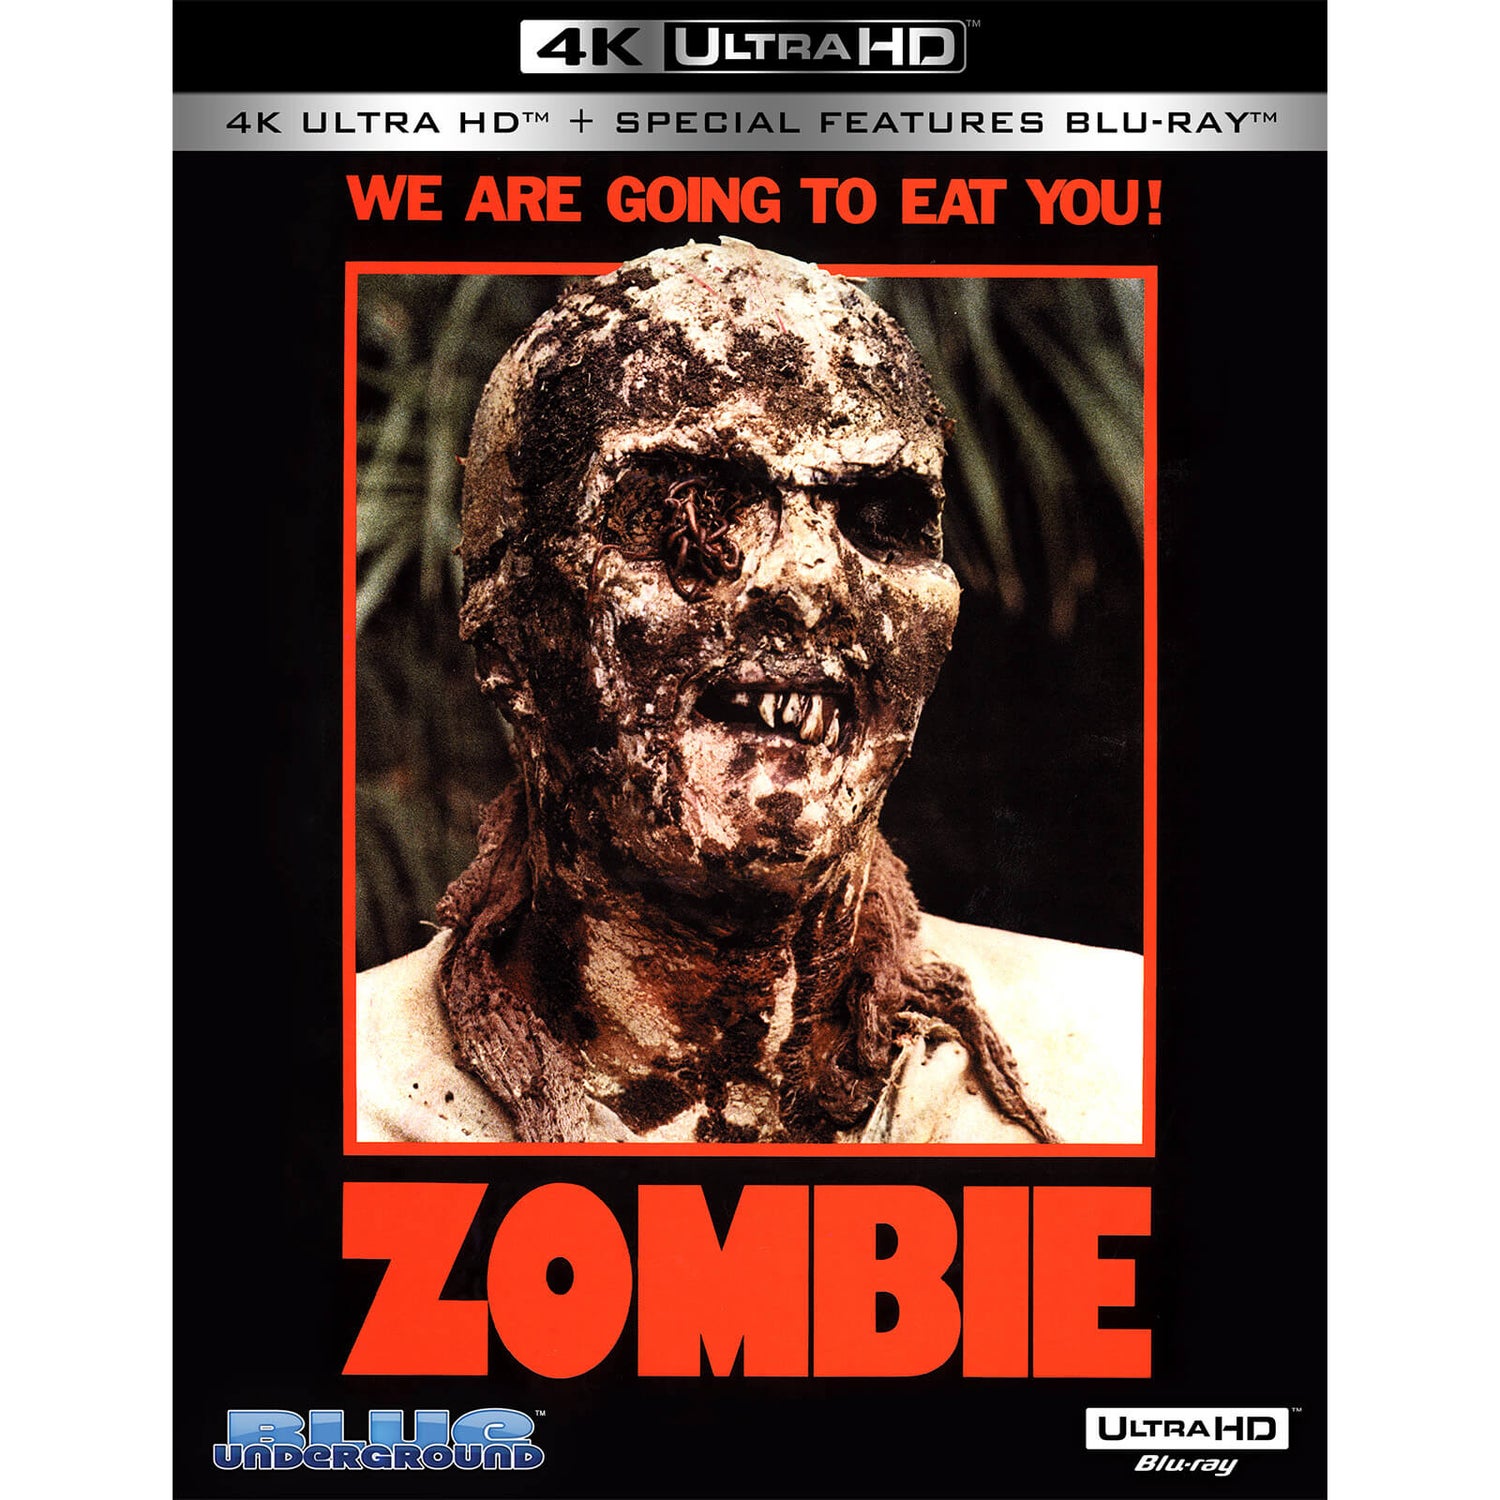 Zombie - 4K Ultra HD (Includes Blu-ray)